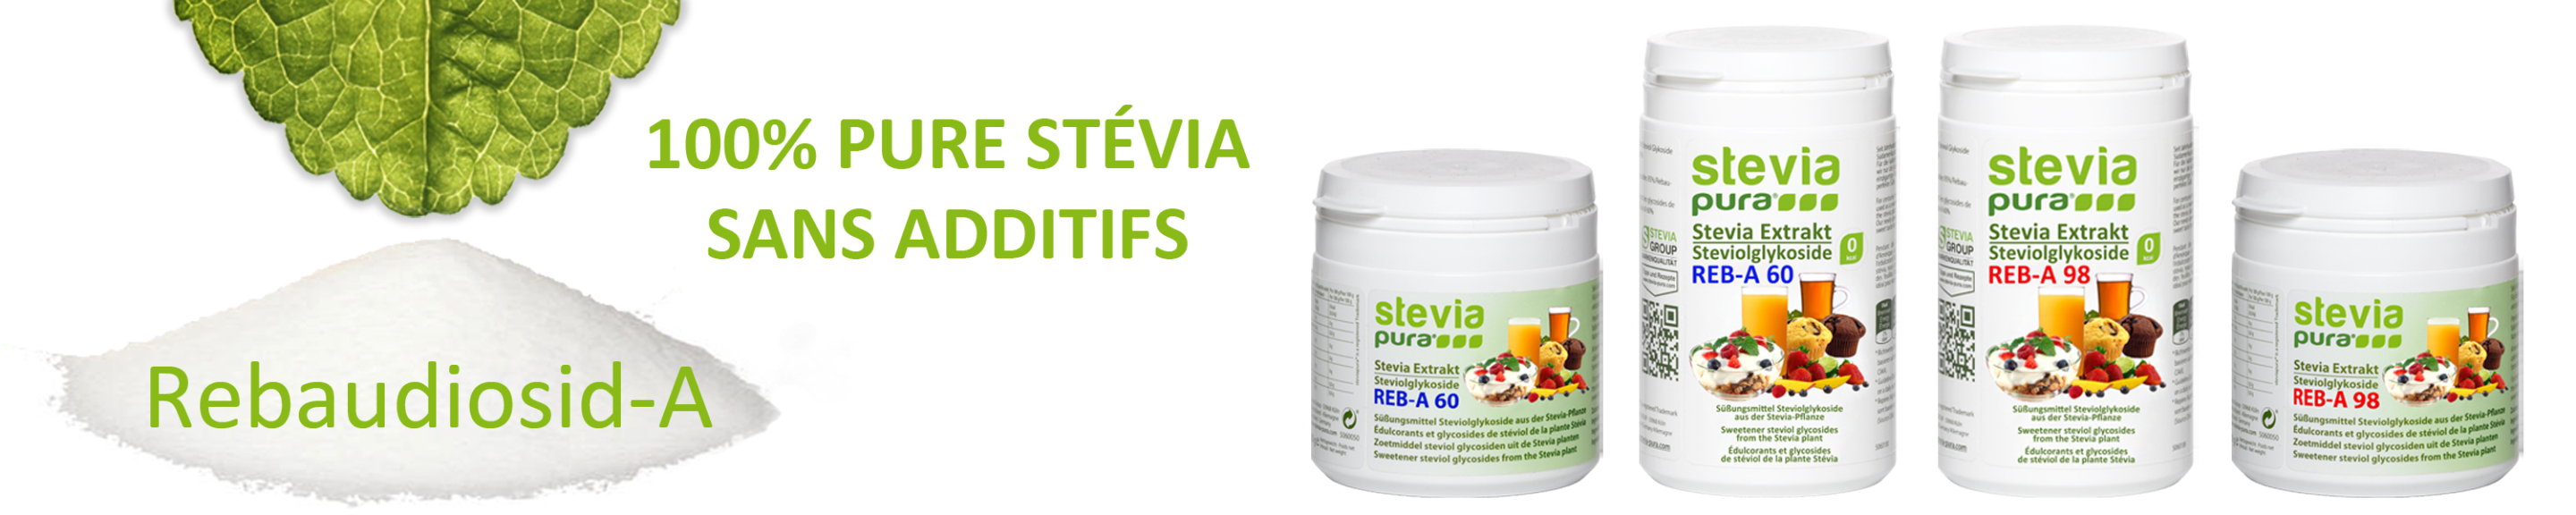 Acheter de la Stévia 100% pure sans additifs rebaudioside...